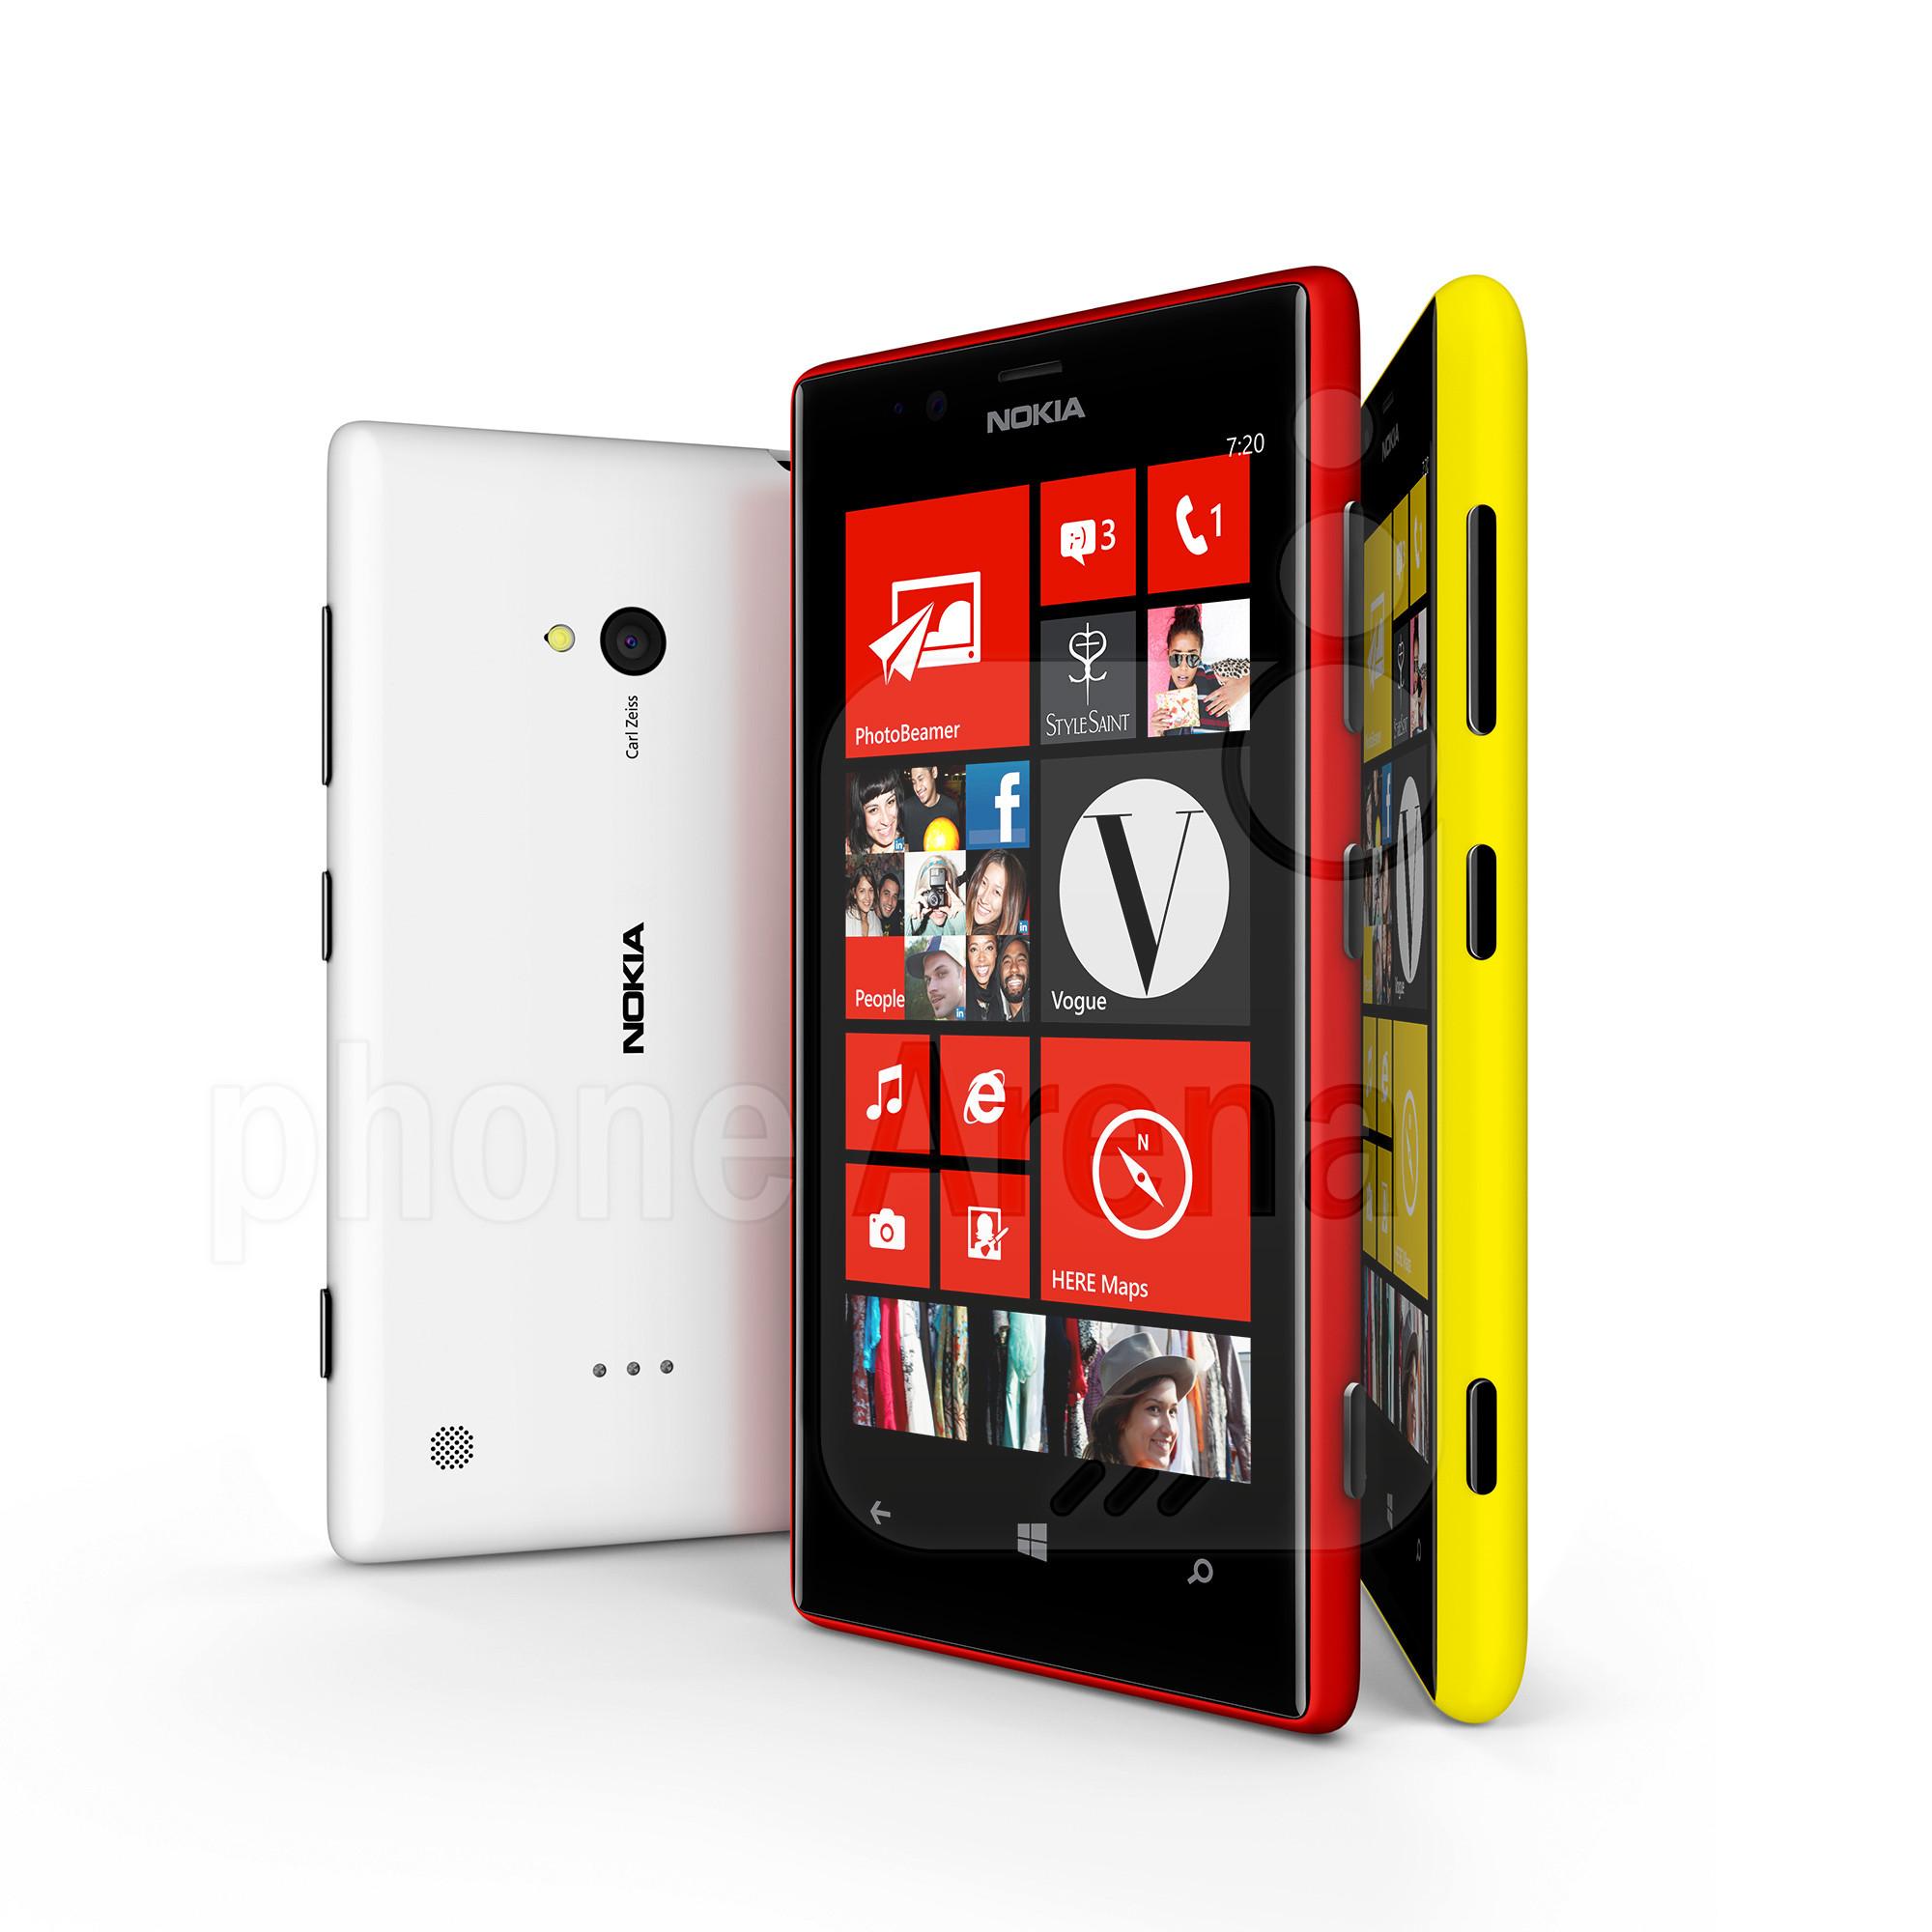 Nokia Lumia 720 fås i mange ulike farger.Foto: Nokia